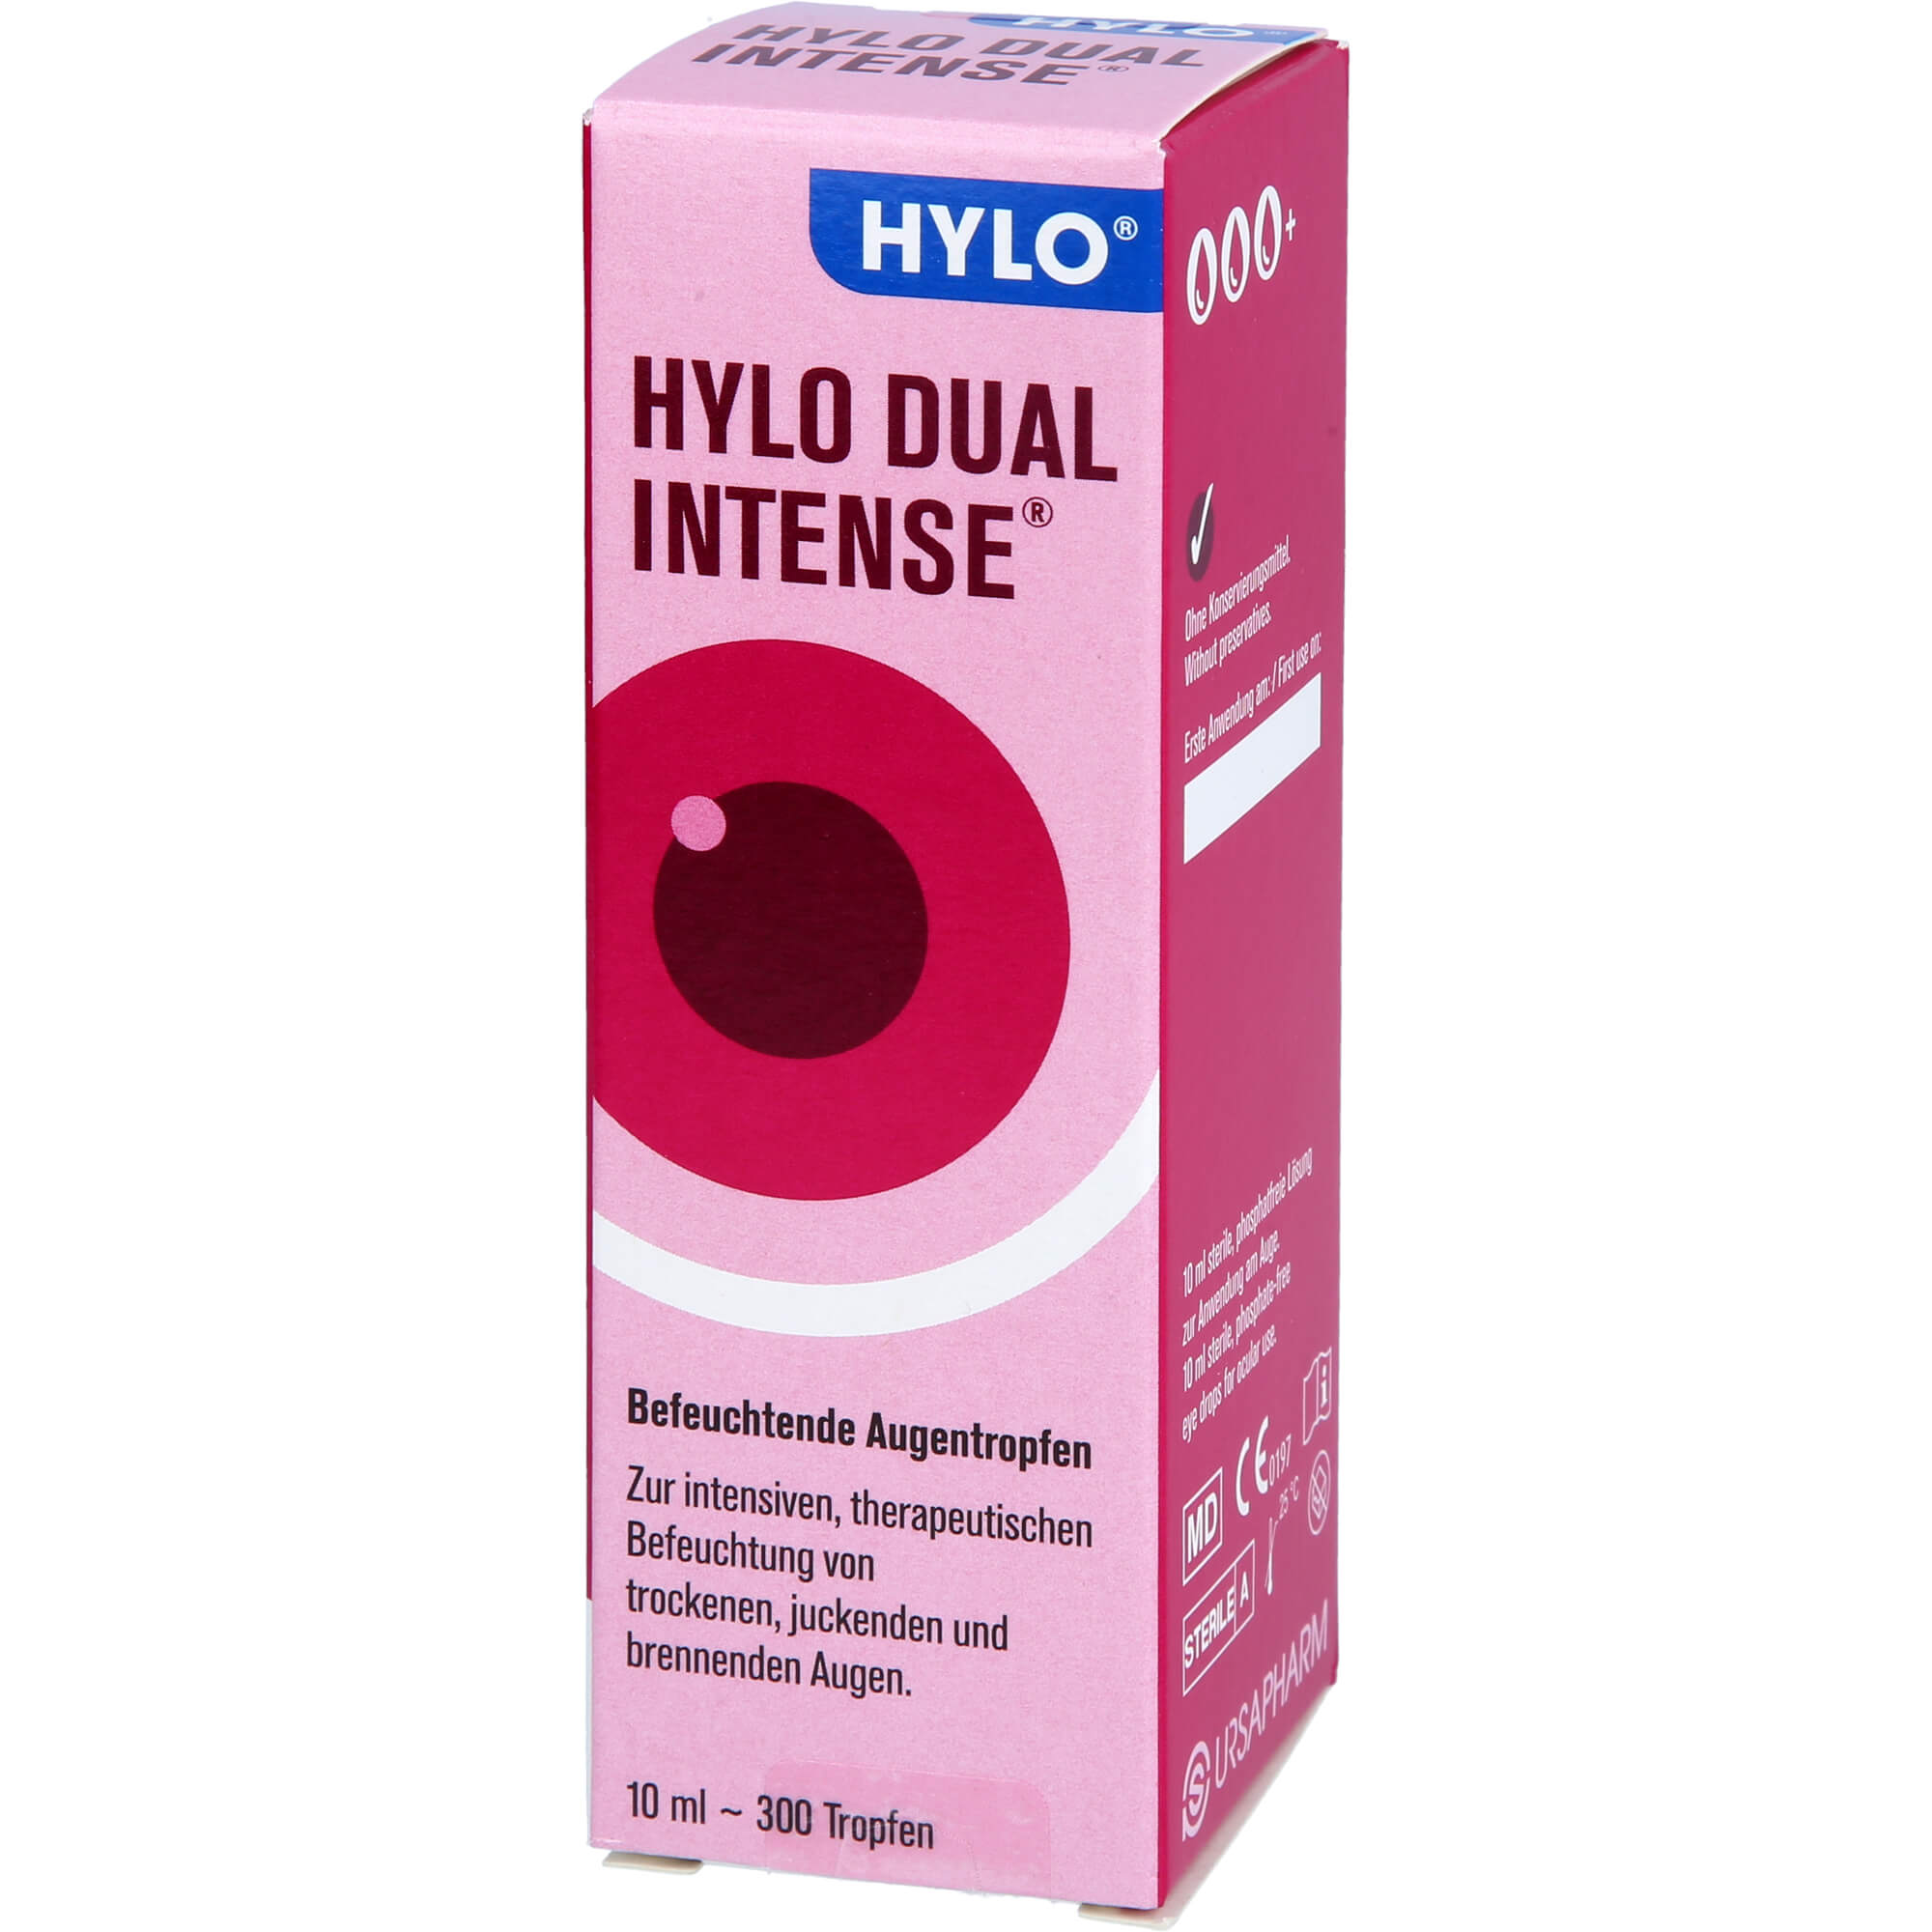 HYLO DUAL INTENSE® - URSAPHARM Arzneimittel GmbH